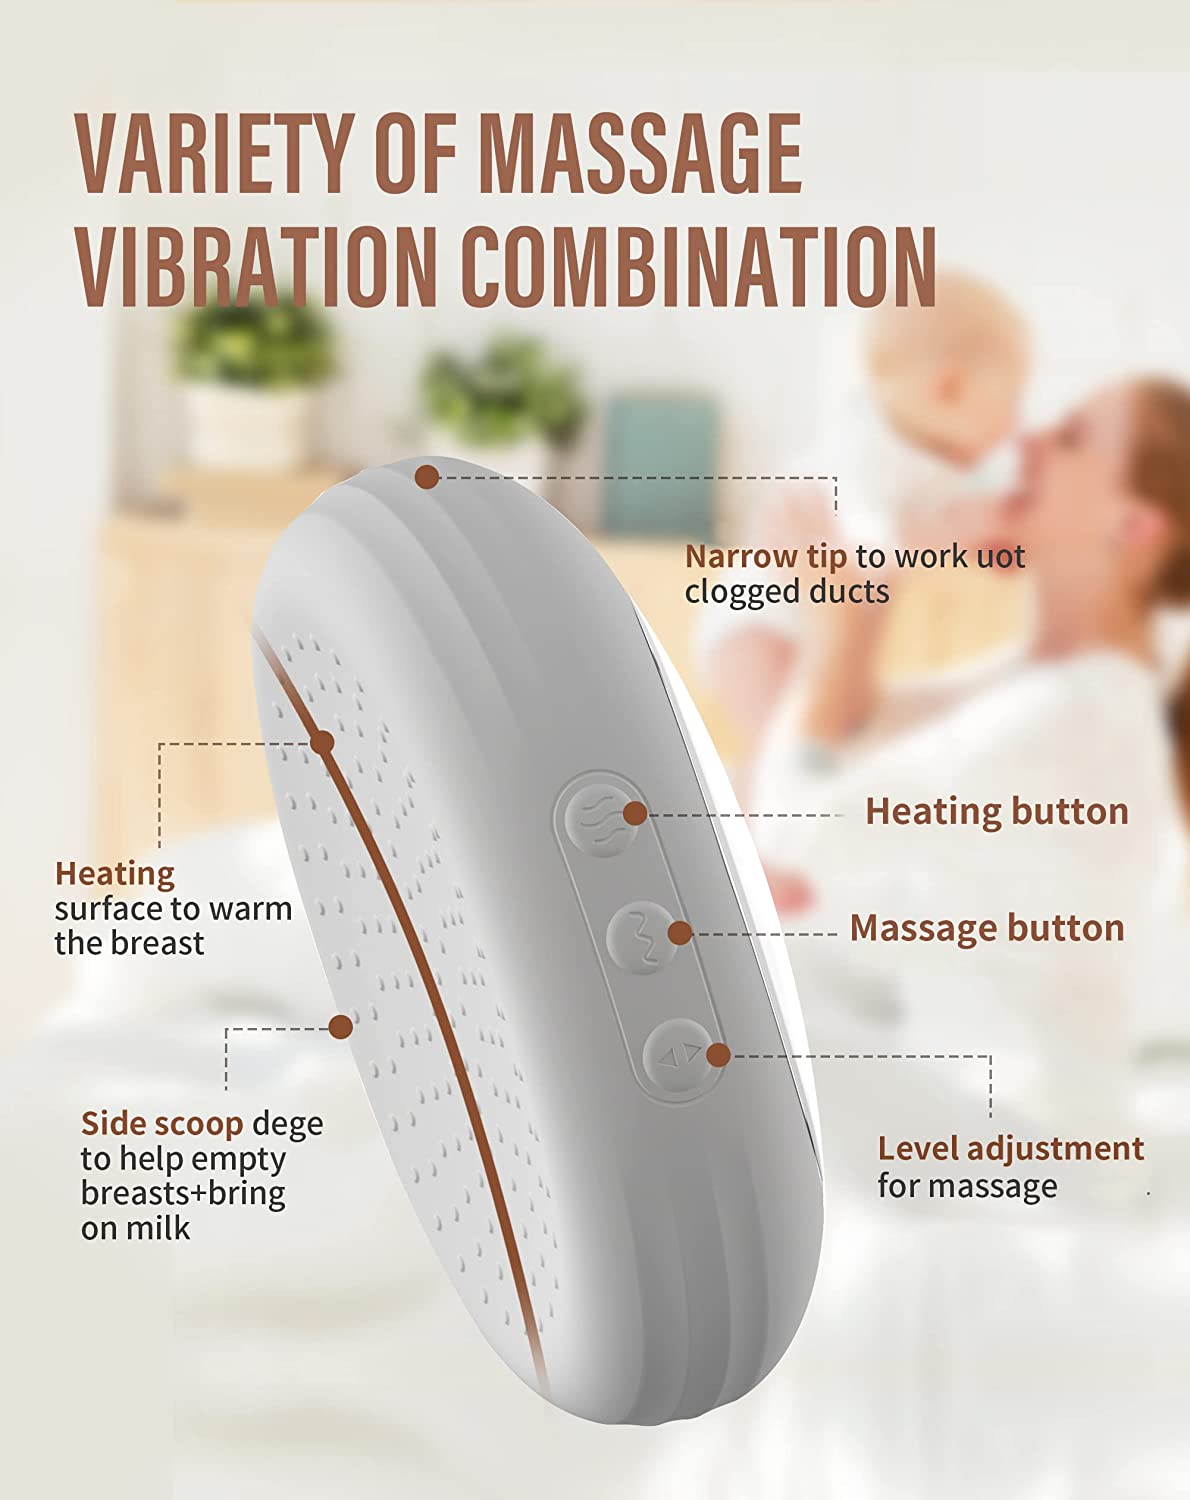 KIDIRA 2-in-1 Warming Lactation Massager, Soft Breast Massager for Bre –  kidirastore